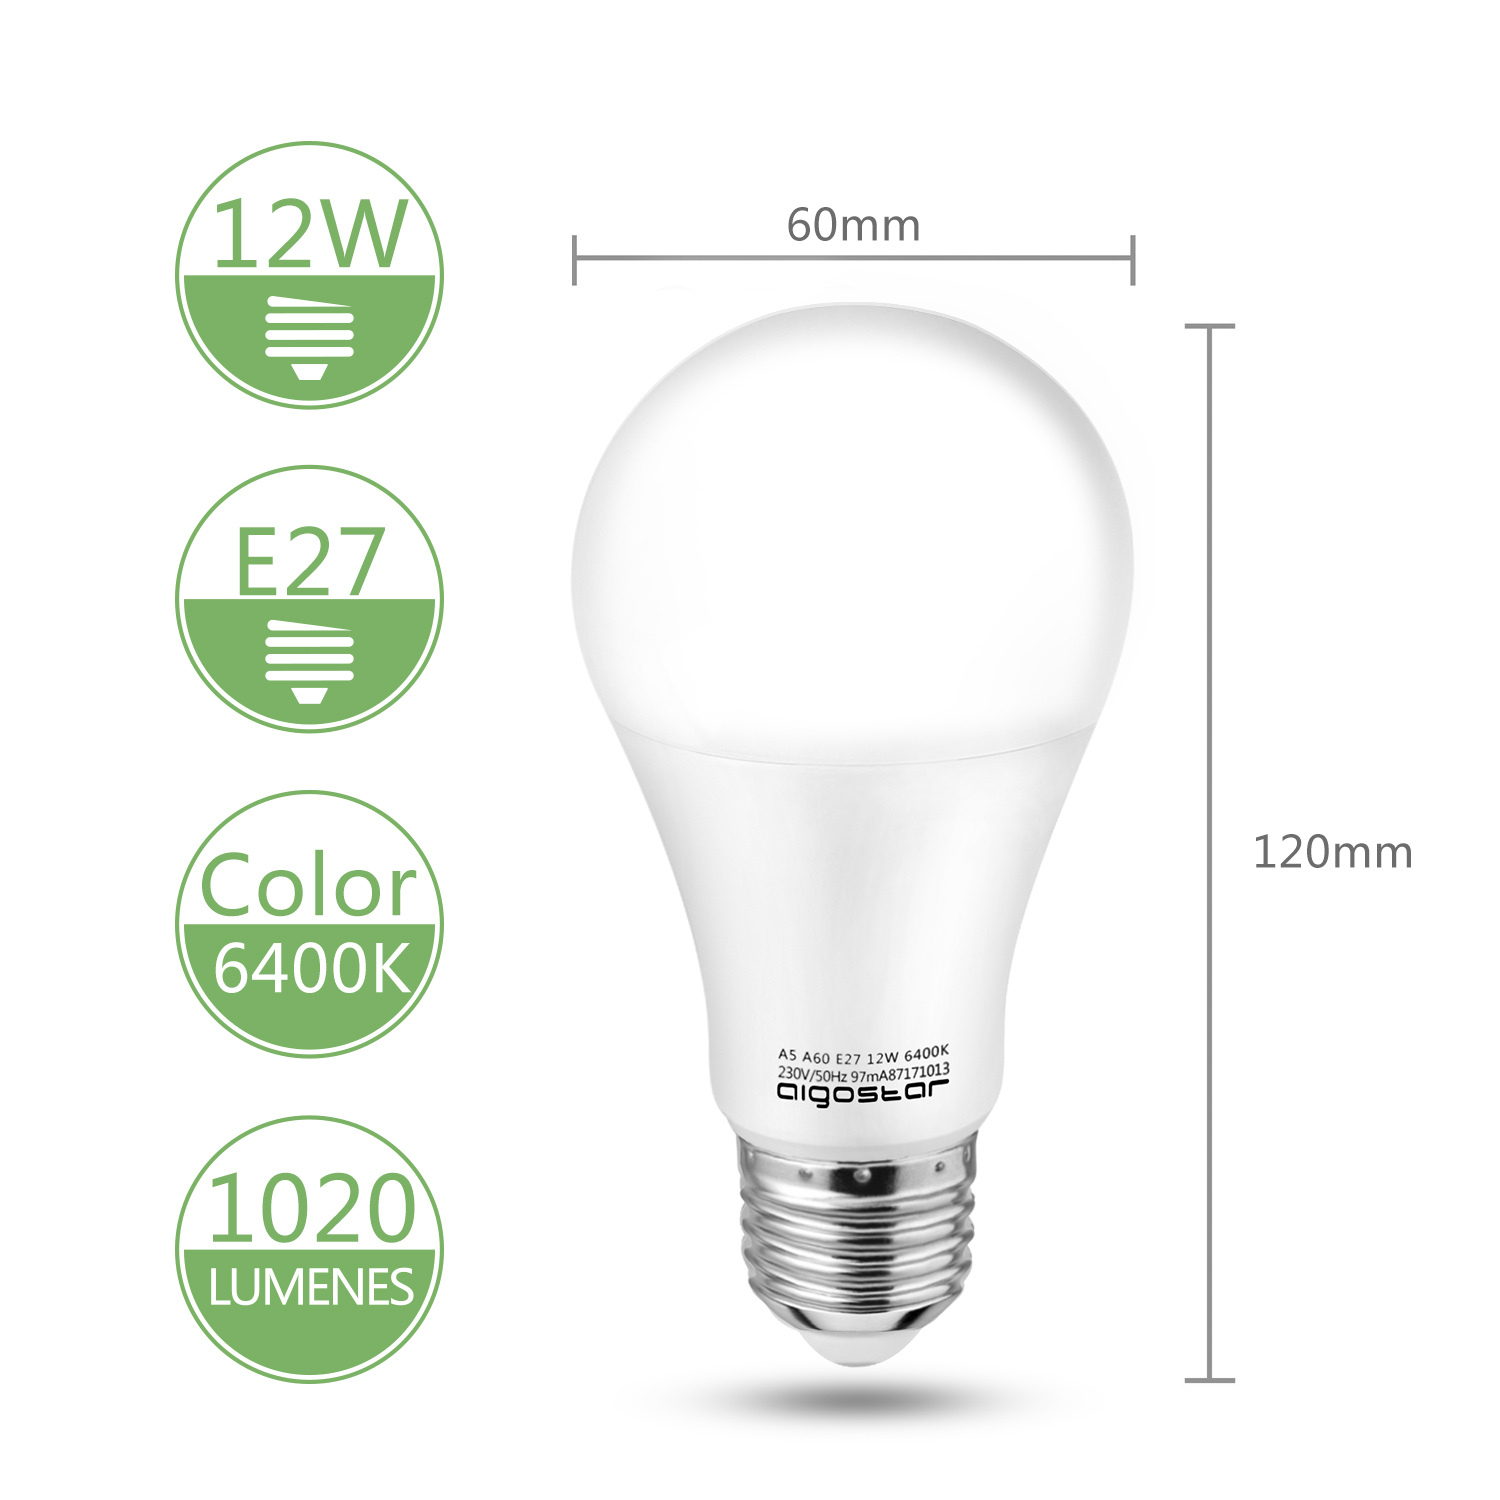 Aigostar LED lamp A5 A60 12W - E27 Fitting - Daglicht 6400K - 1020 lumen - Set van 5.